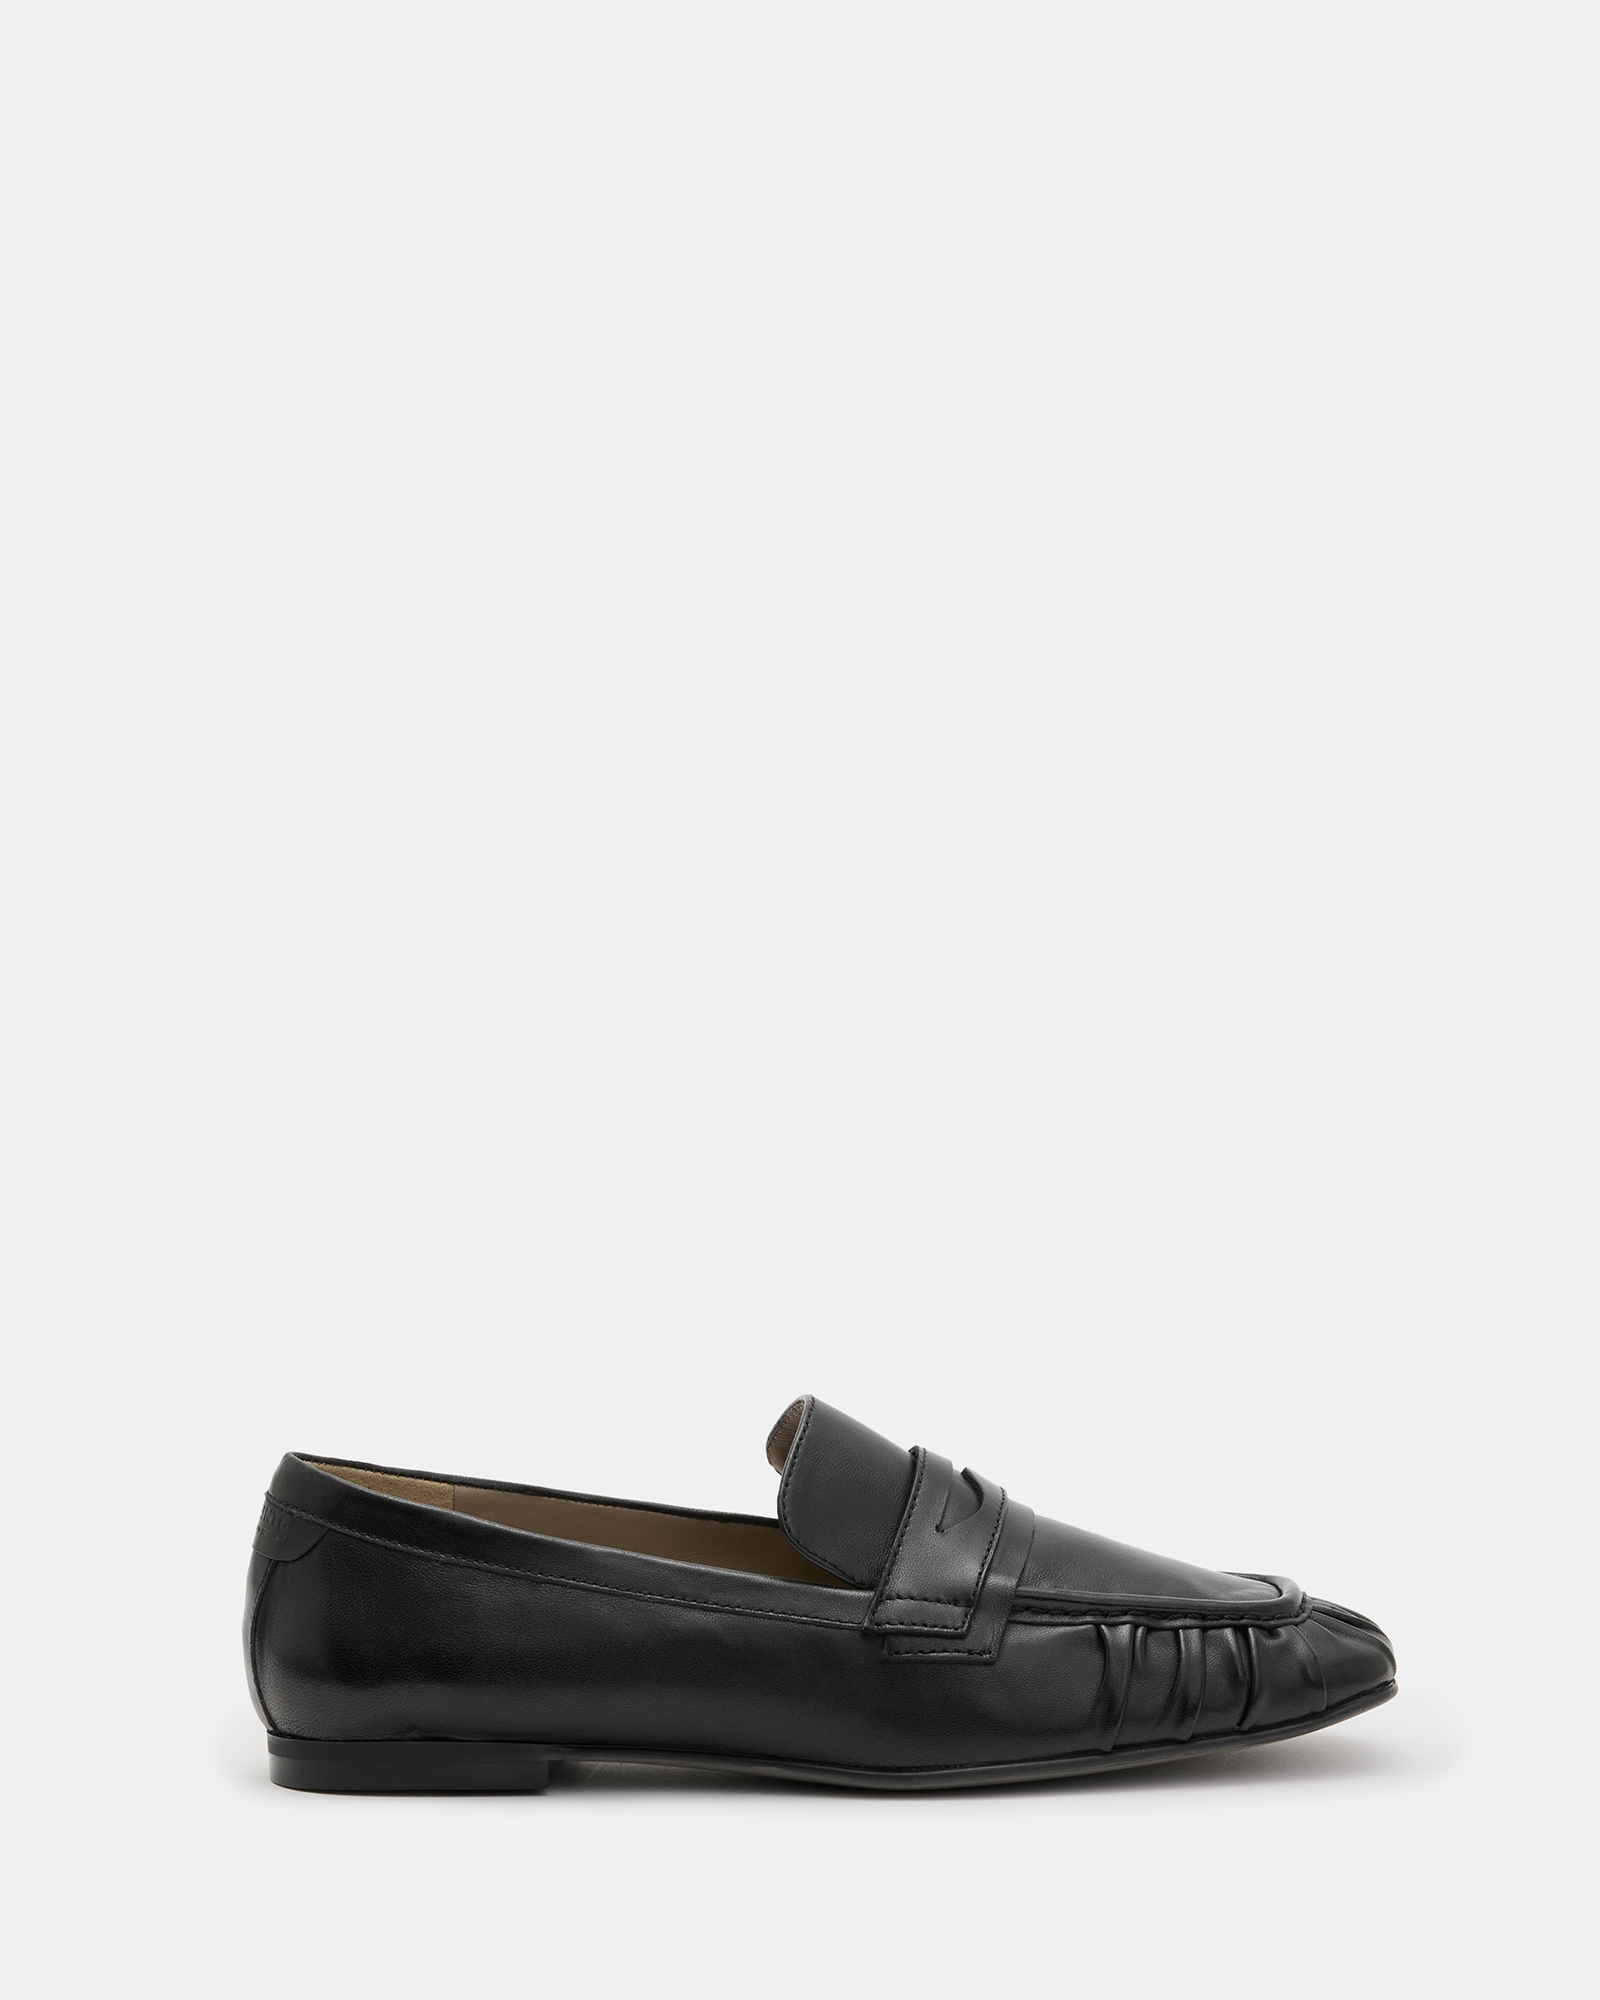 AllSaints Sapphire Leather Loafer Shoes,, Black